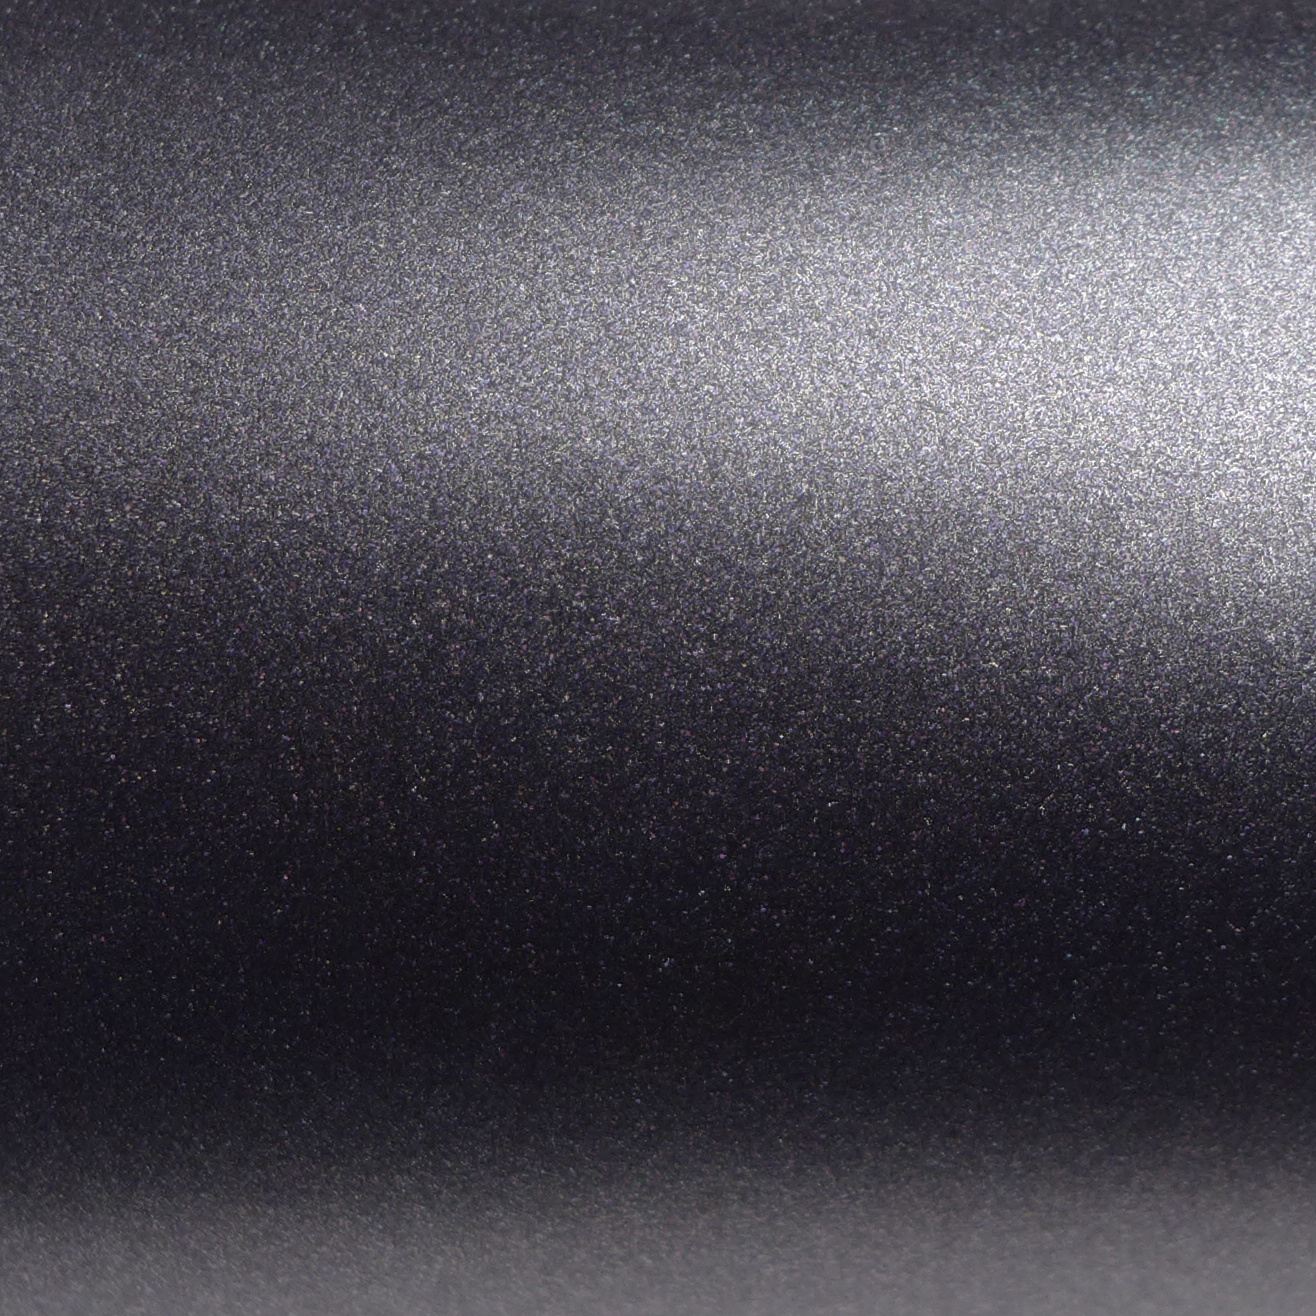 3M 2080 S261 dark gray wrapping bilindpakning grå satin folie carl jensen